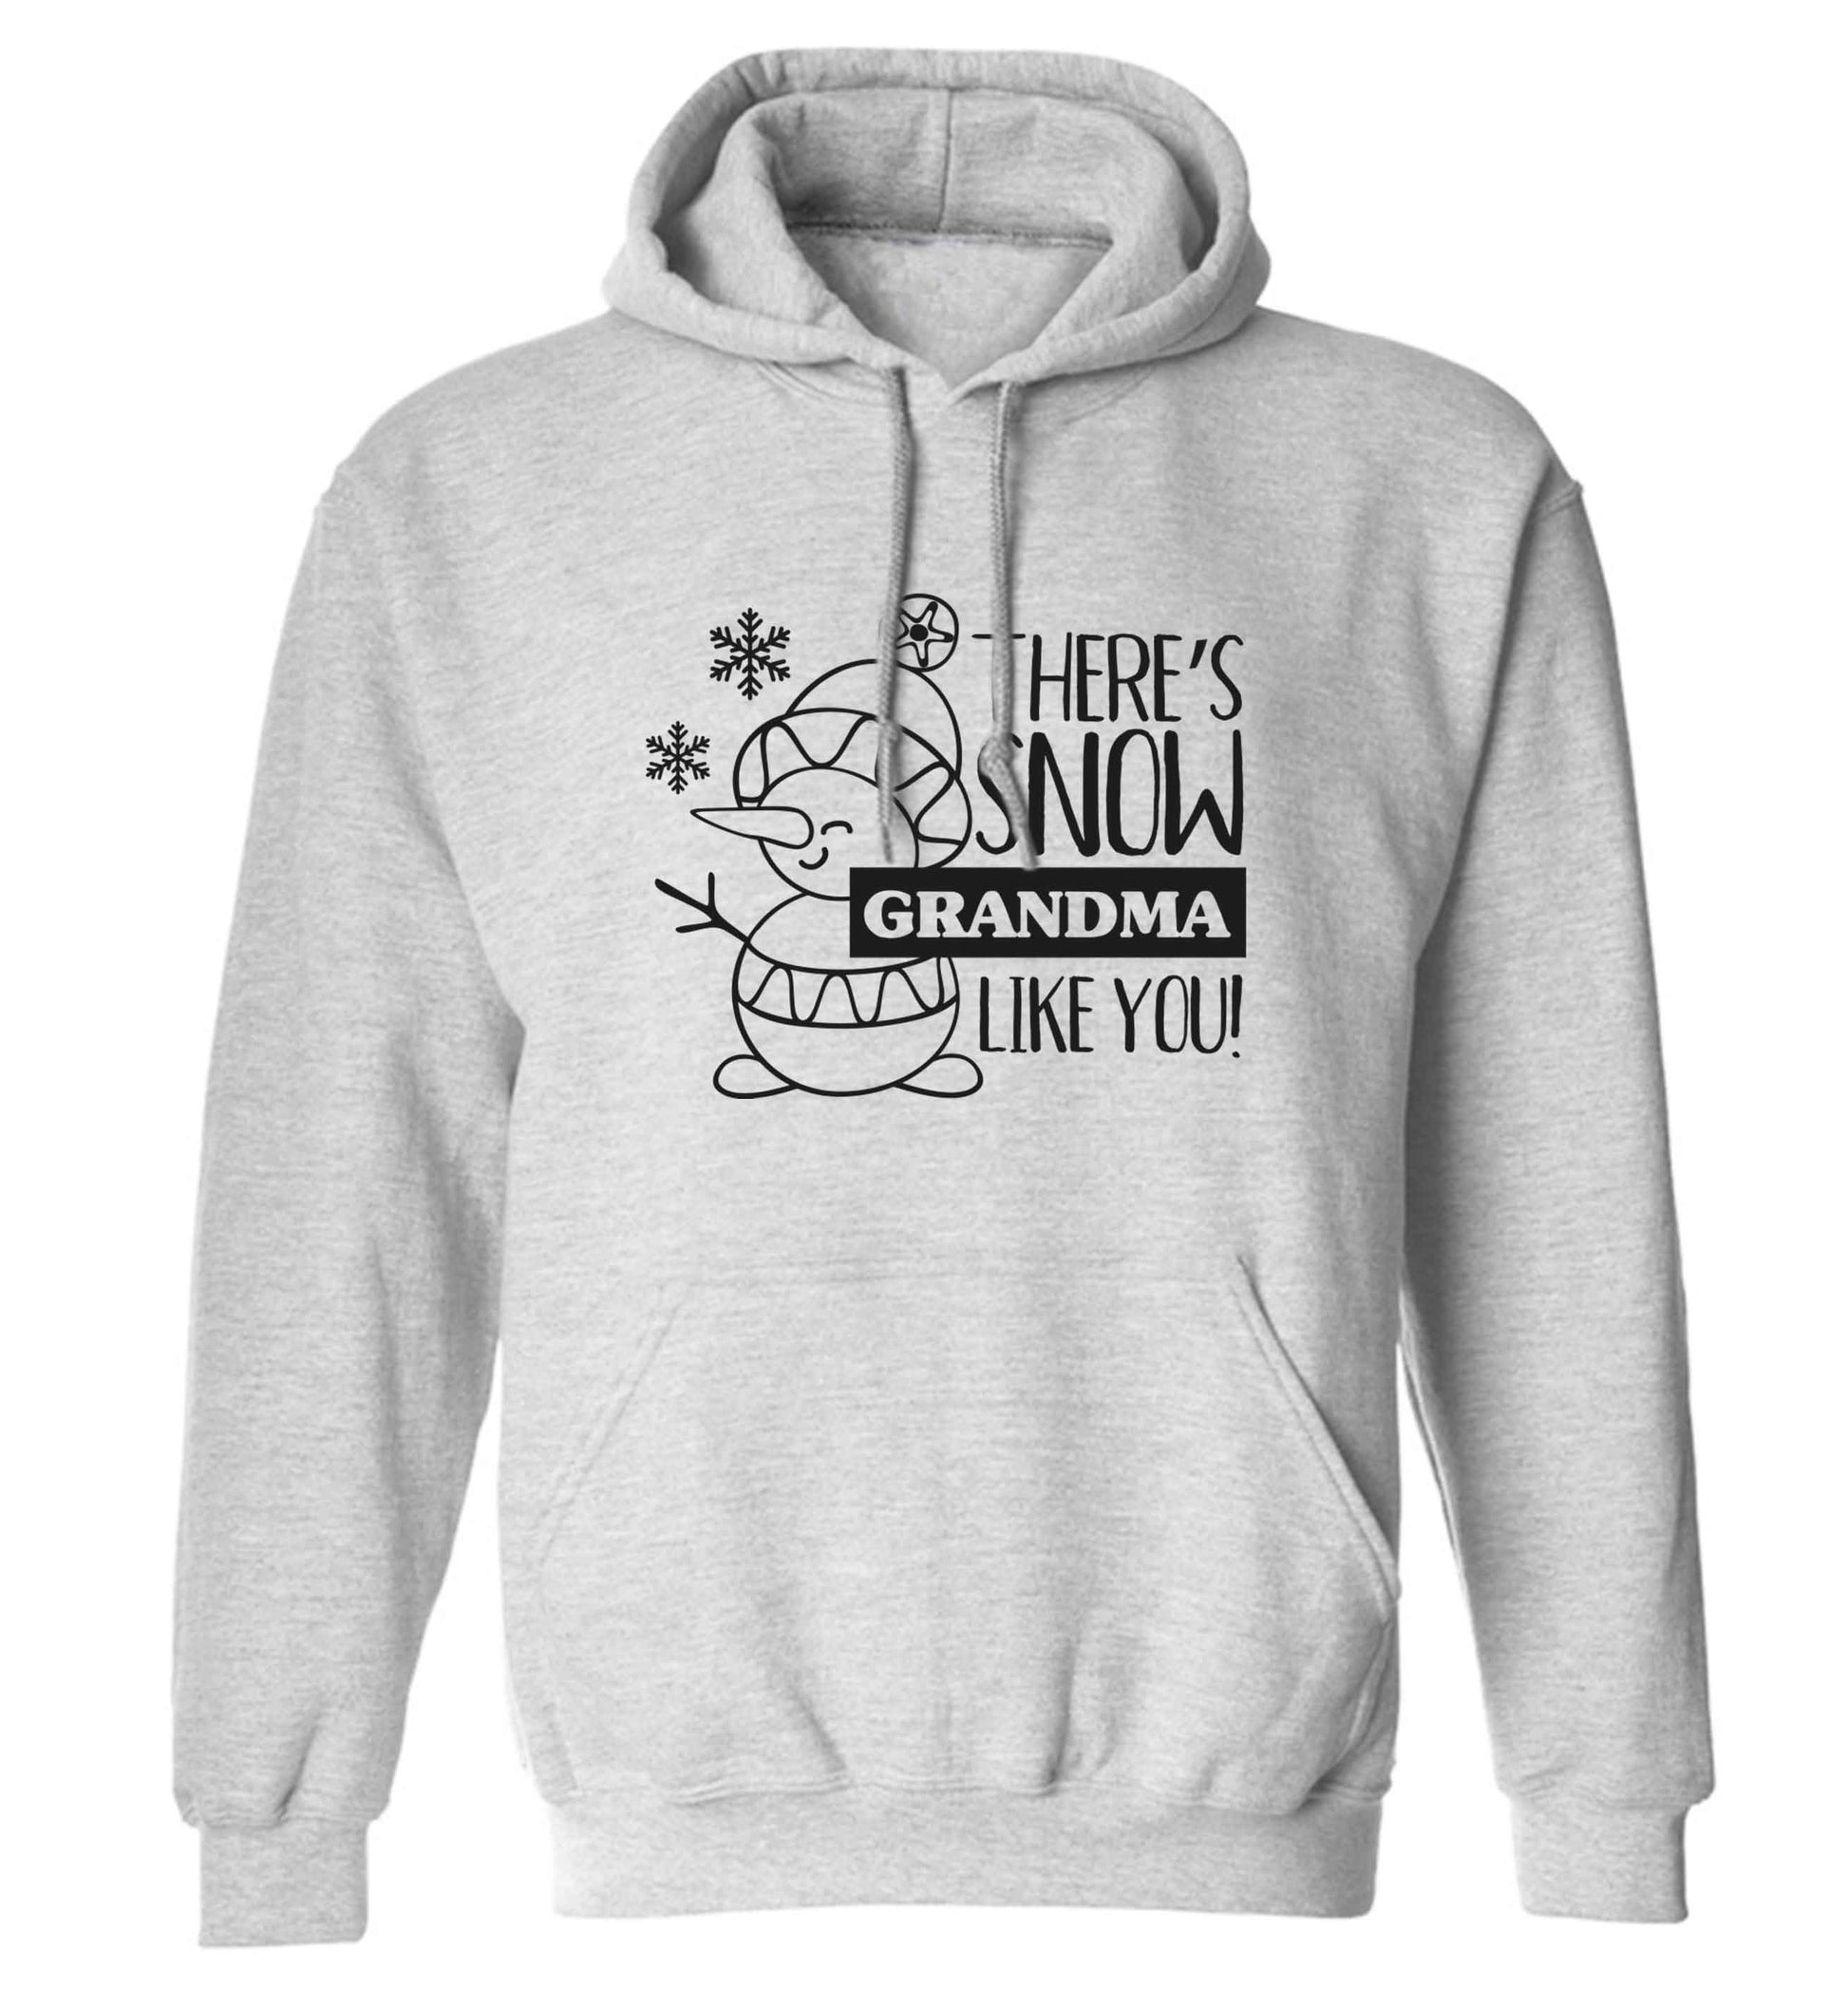 There's snow grandma like you adults unisex grey hoodie 2XL